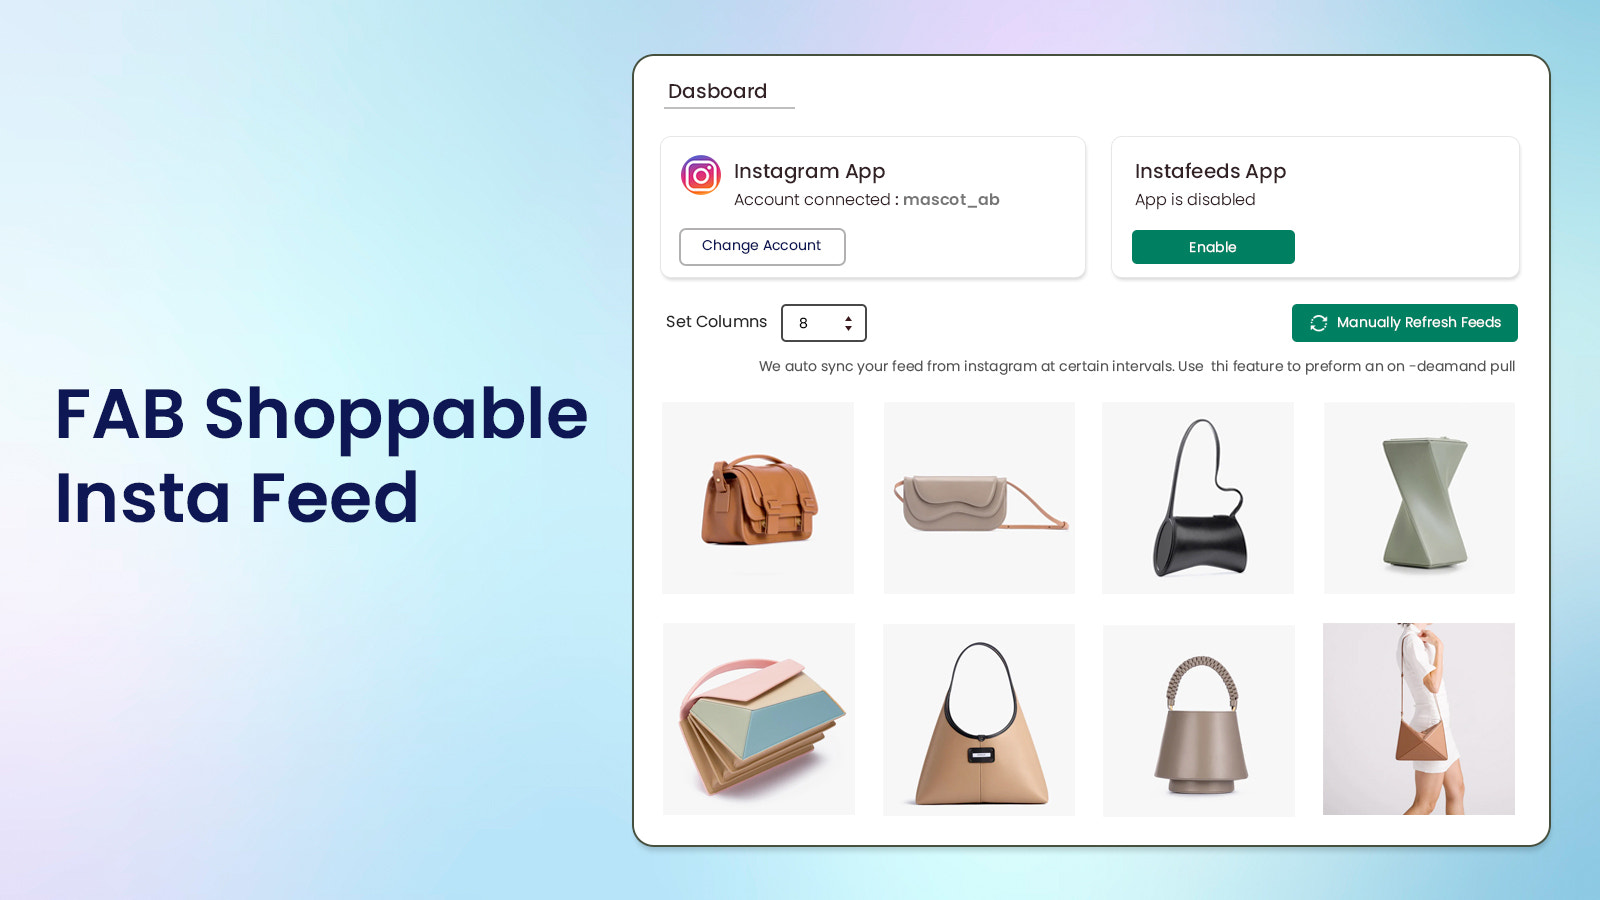 Shoppable Instagram feed